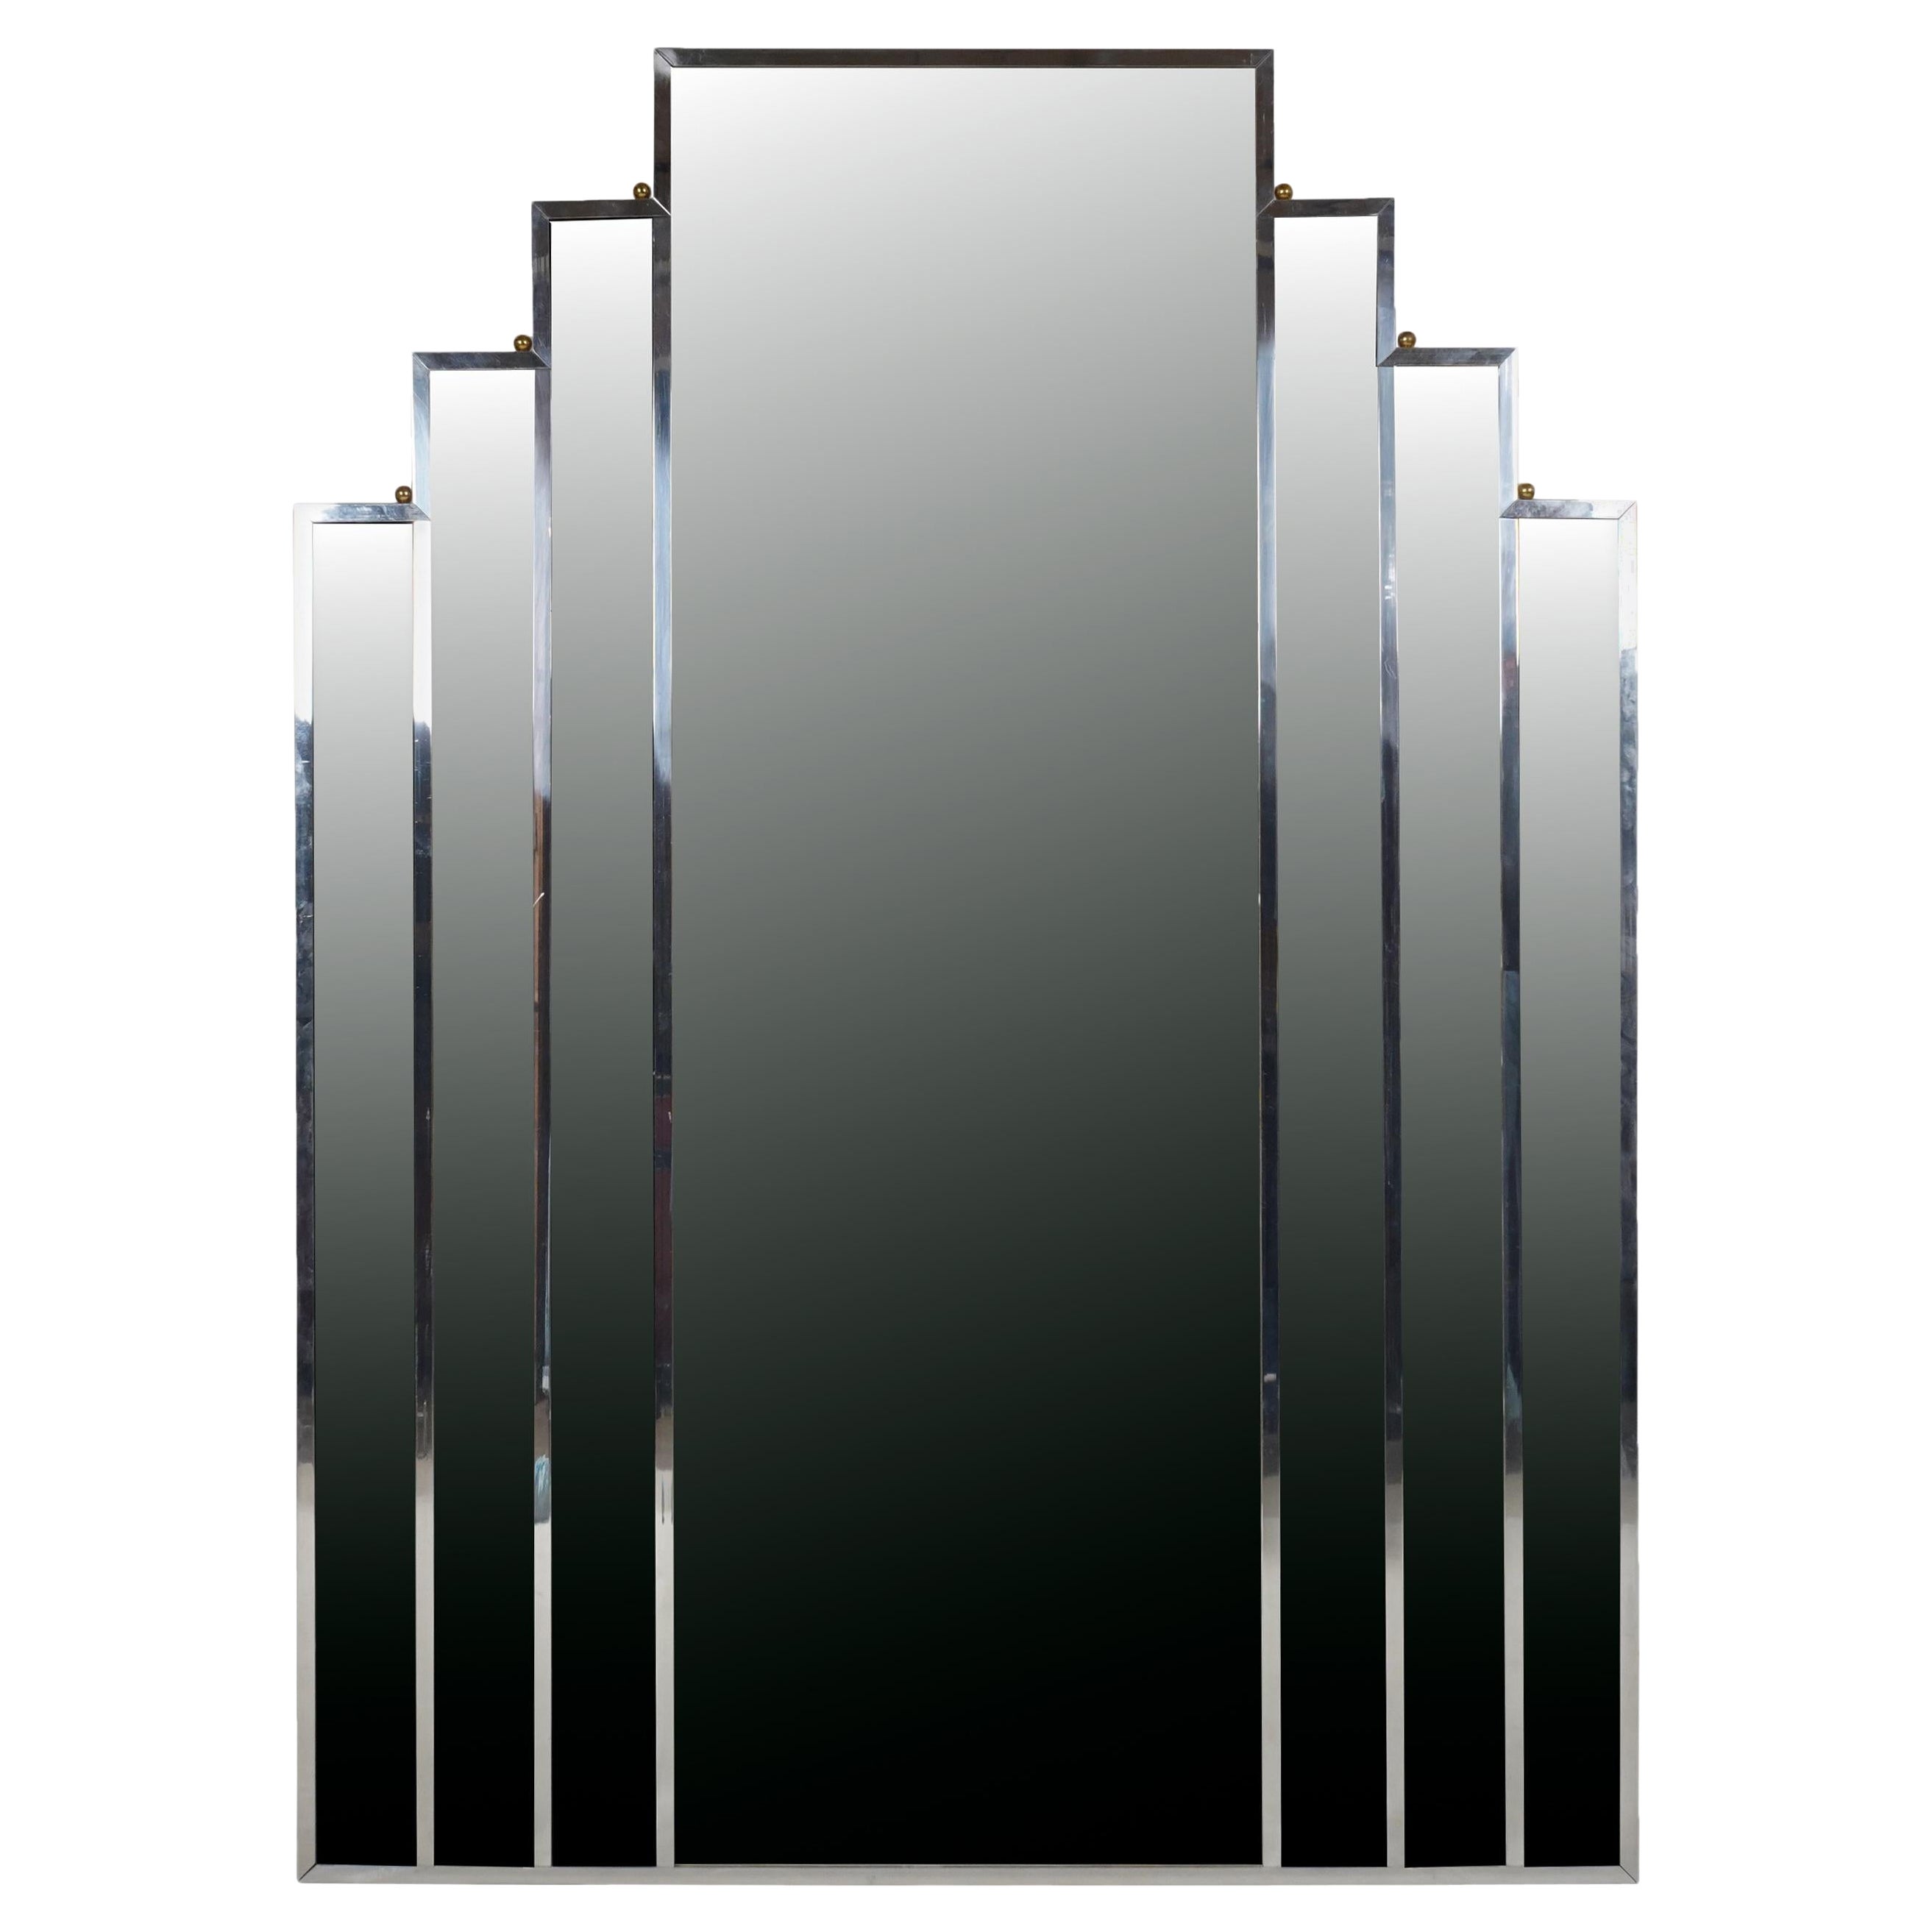 Art Deco Style Mirror with Chrome Frame